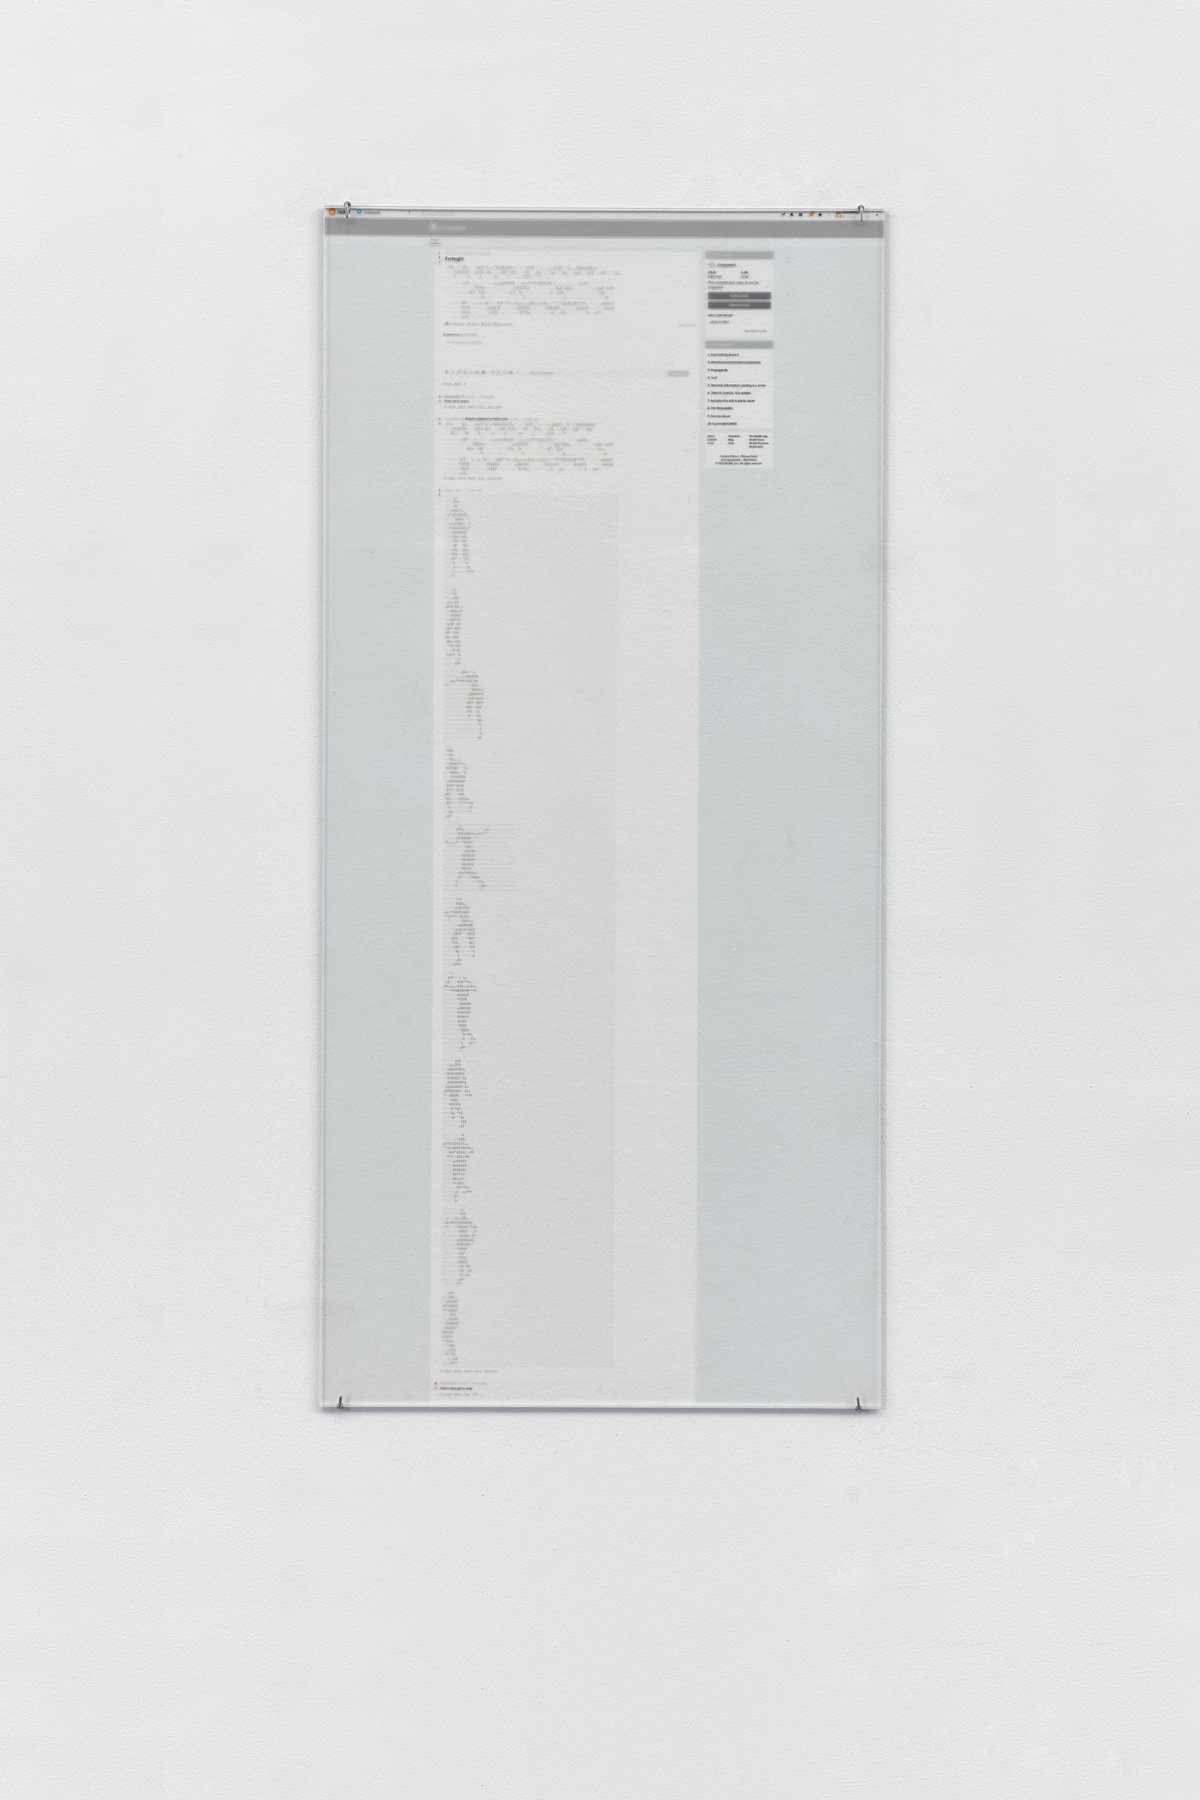 Julien BismuthI like it enough to stop., 2019Inkjet print on plexiglass125.2 x 58.4 cm